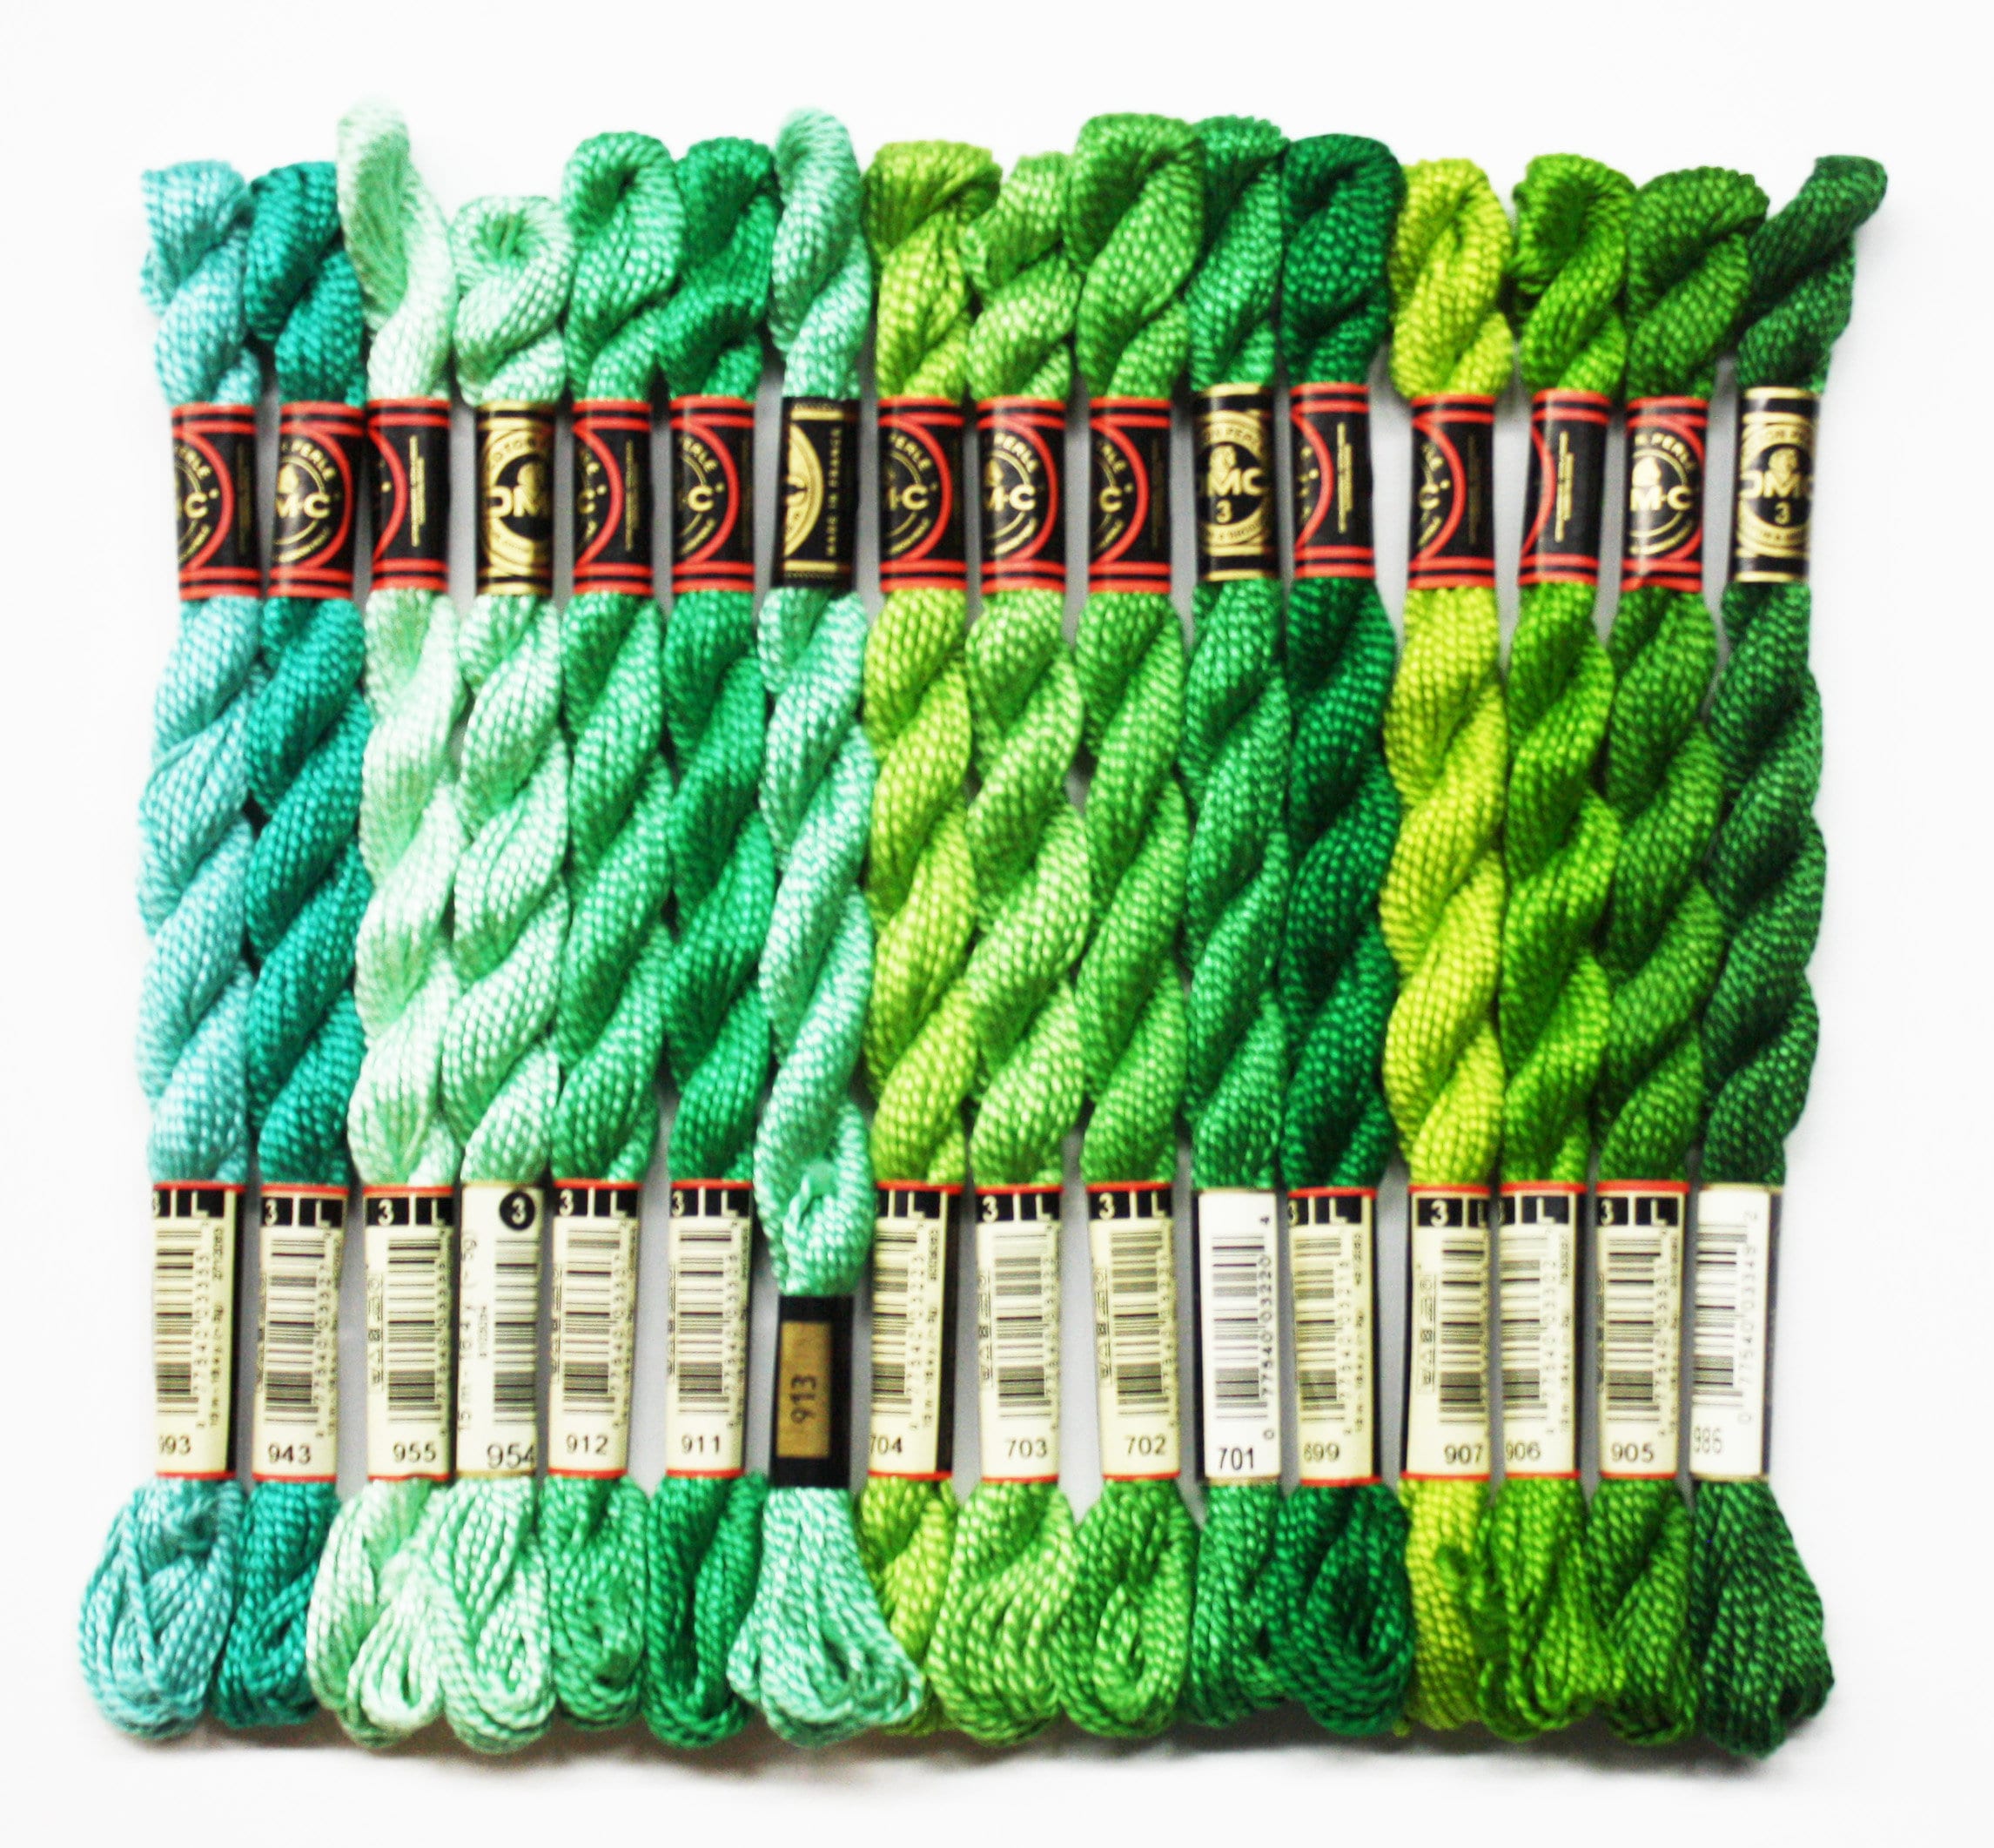 DMC Perle Cotton Size 3, Perle Cotton Thread, Needlepoint Threads